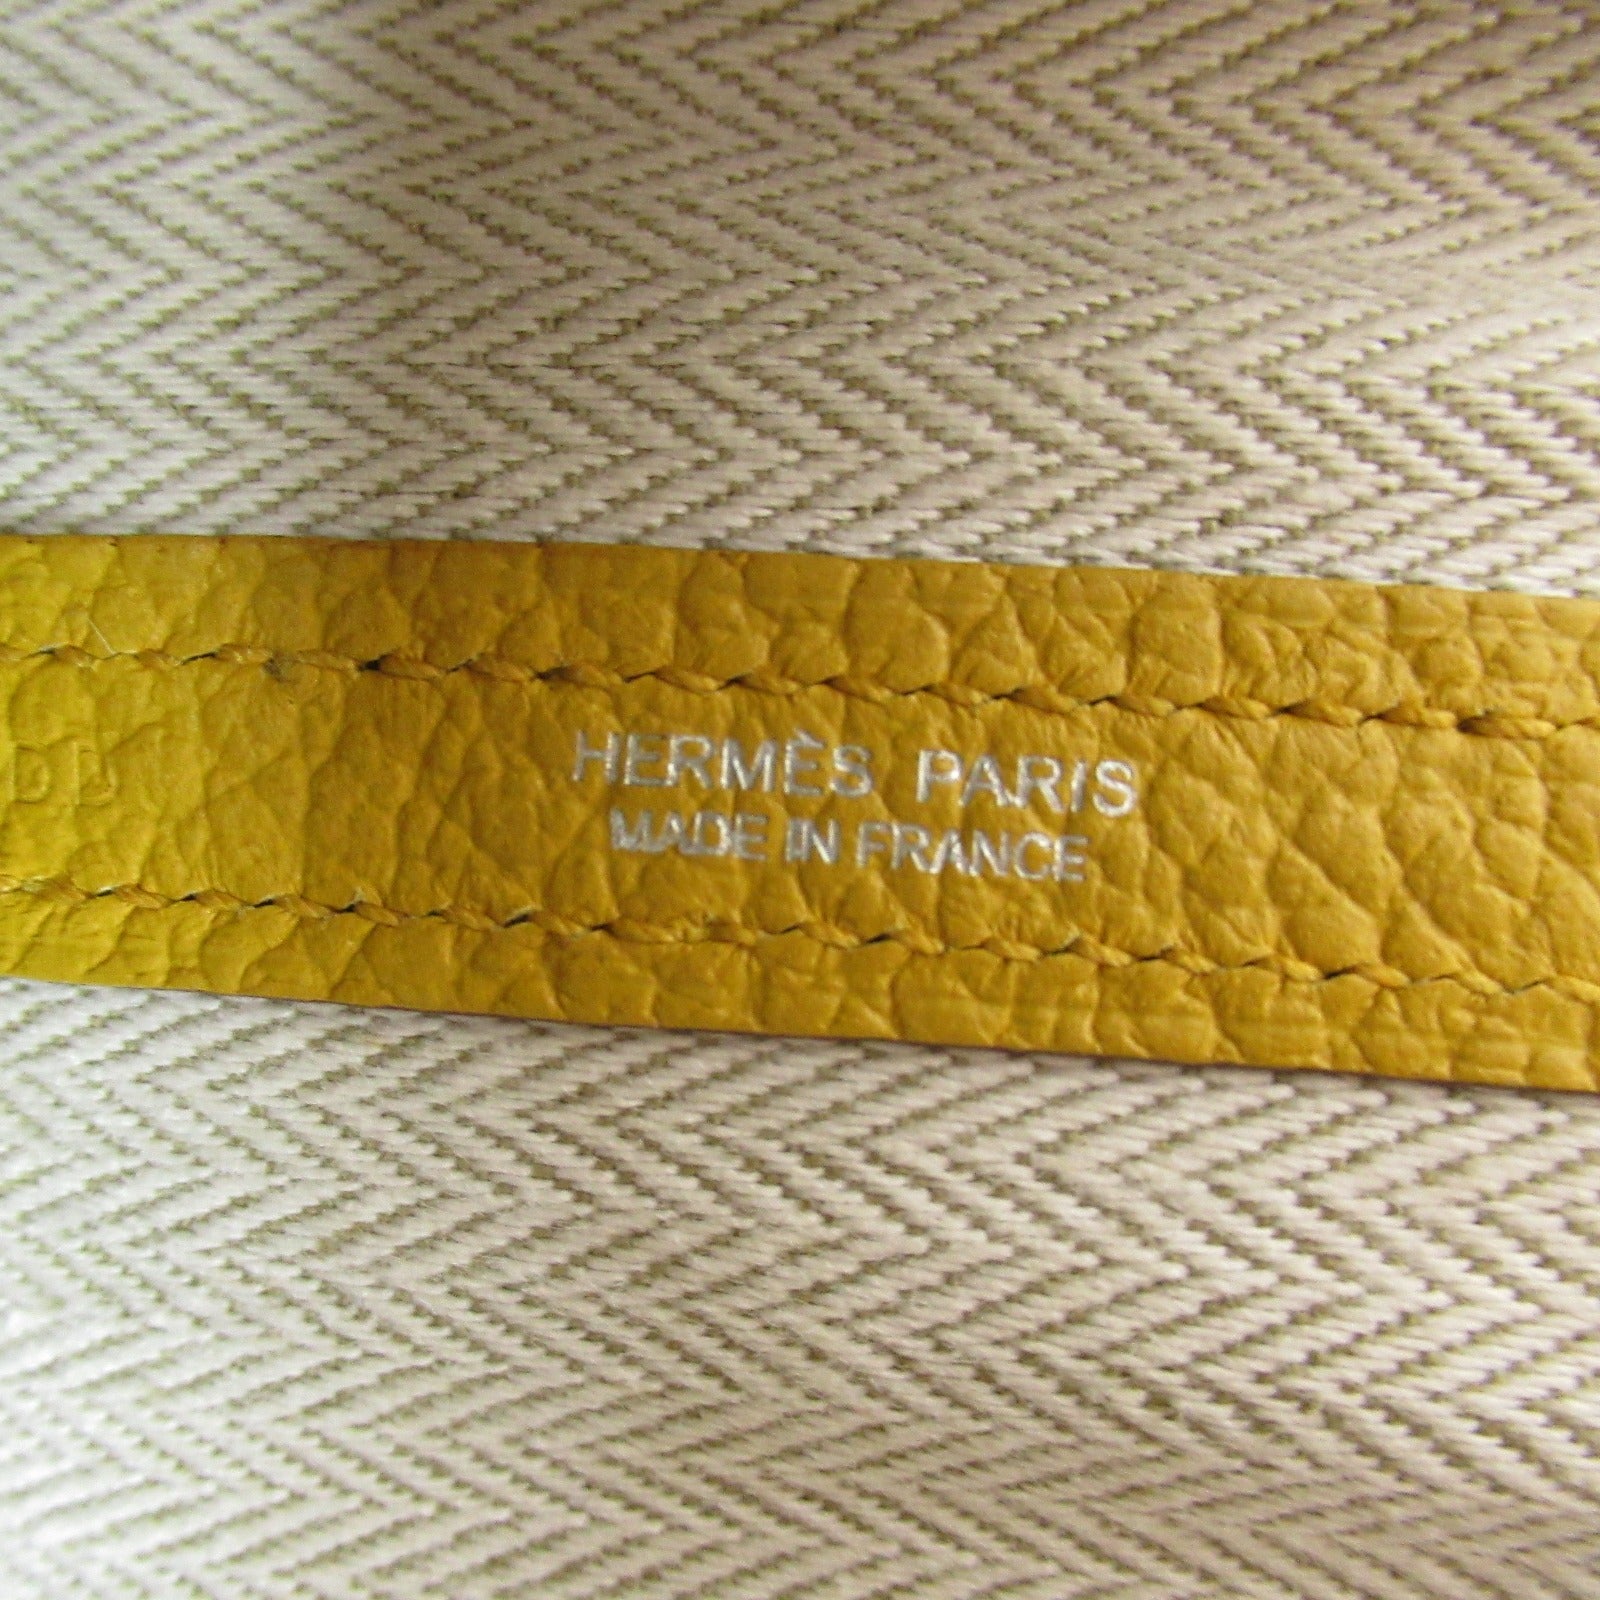 Hermes Hermes Garden Party PM John Ambur Tote Bag  Bag Leather Country  Yellow Shape